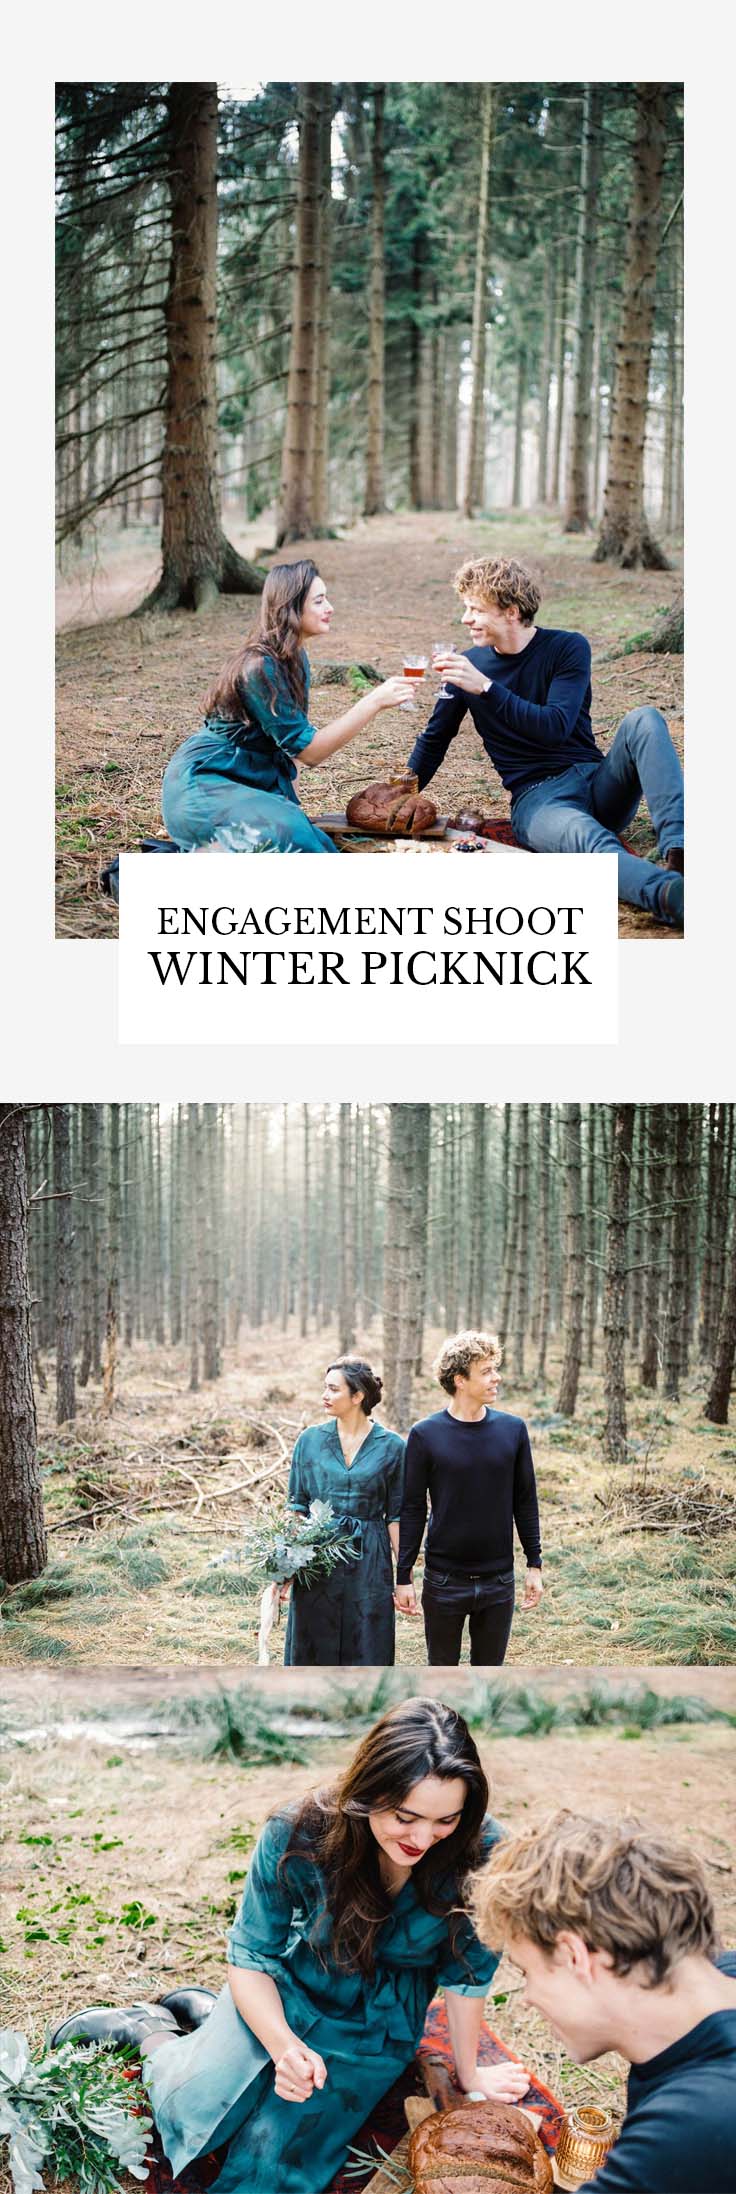 Engagement shoot winter picknick